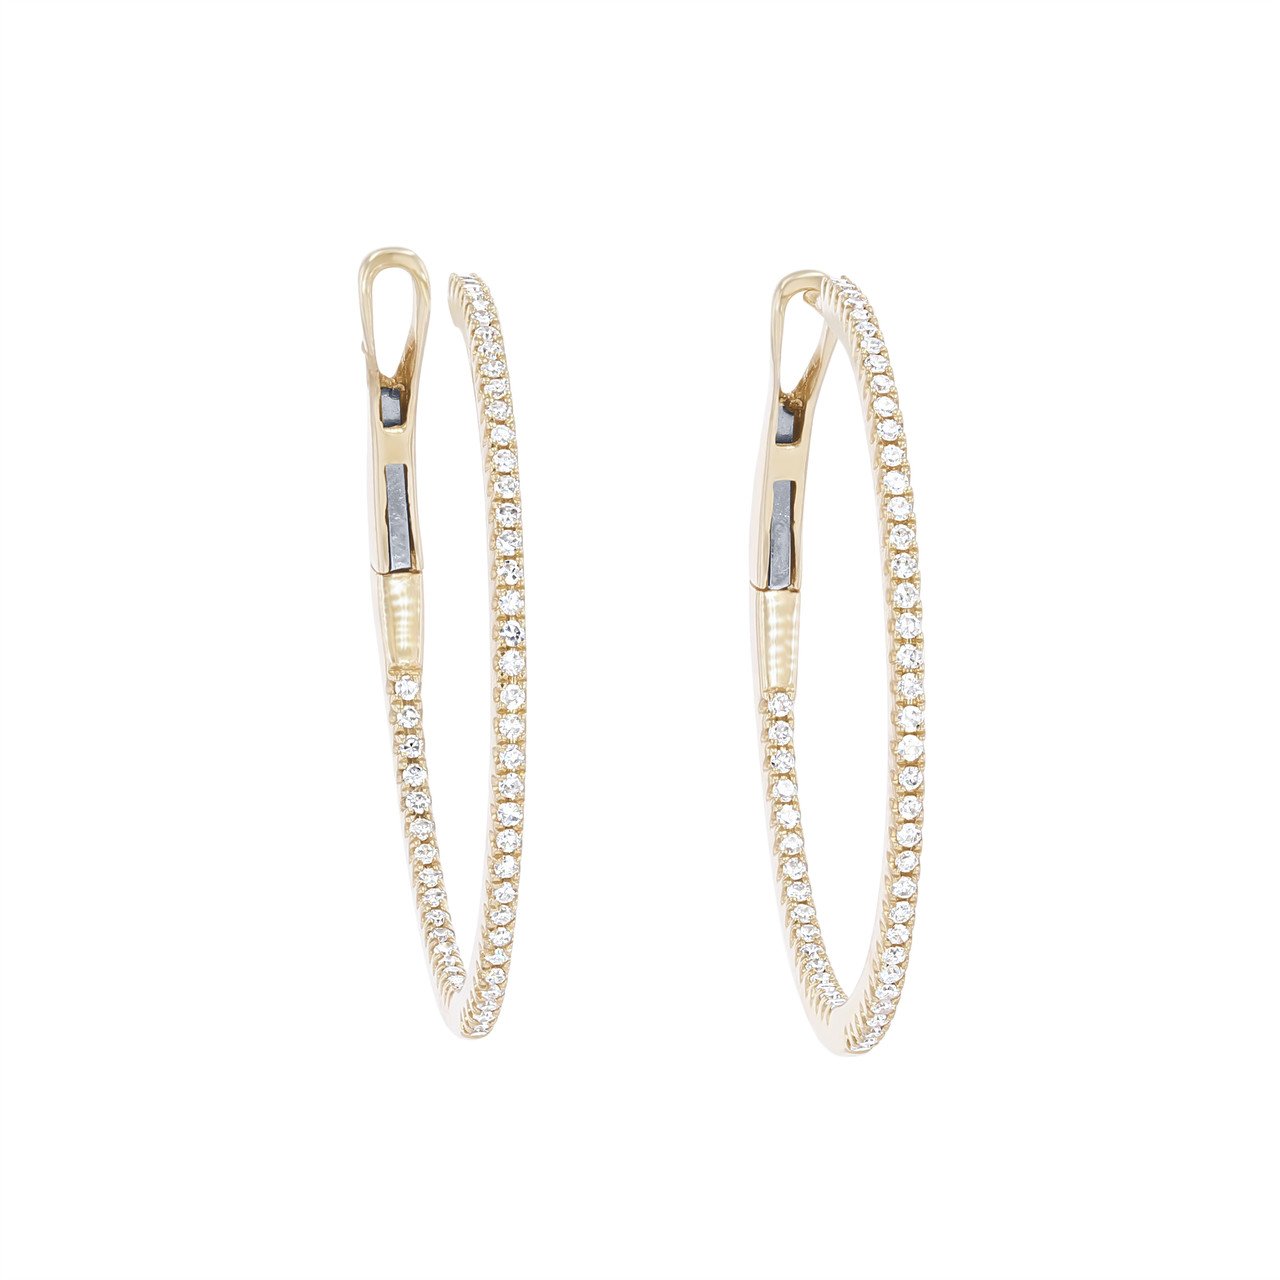 Diamond Hoop Earrings Inside Outside Natural Diamonds 1 ct In 10k White  Gold From Jewelpa at Rs 62600/pair | Haripura | Surat | ID: 14642694862